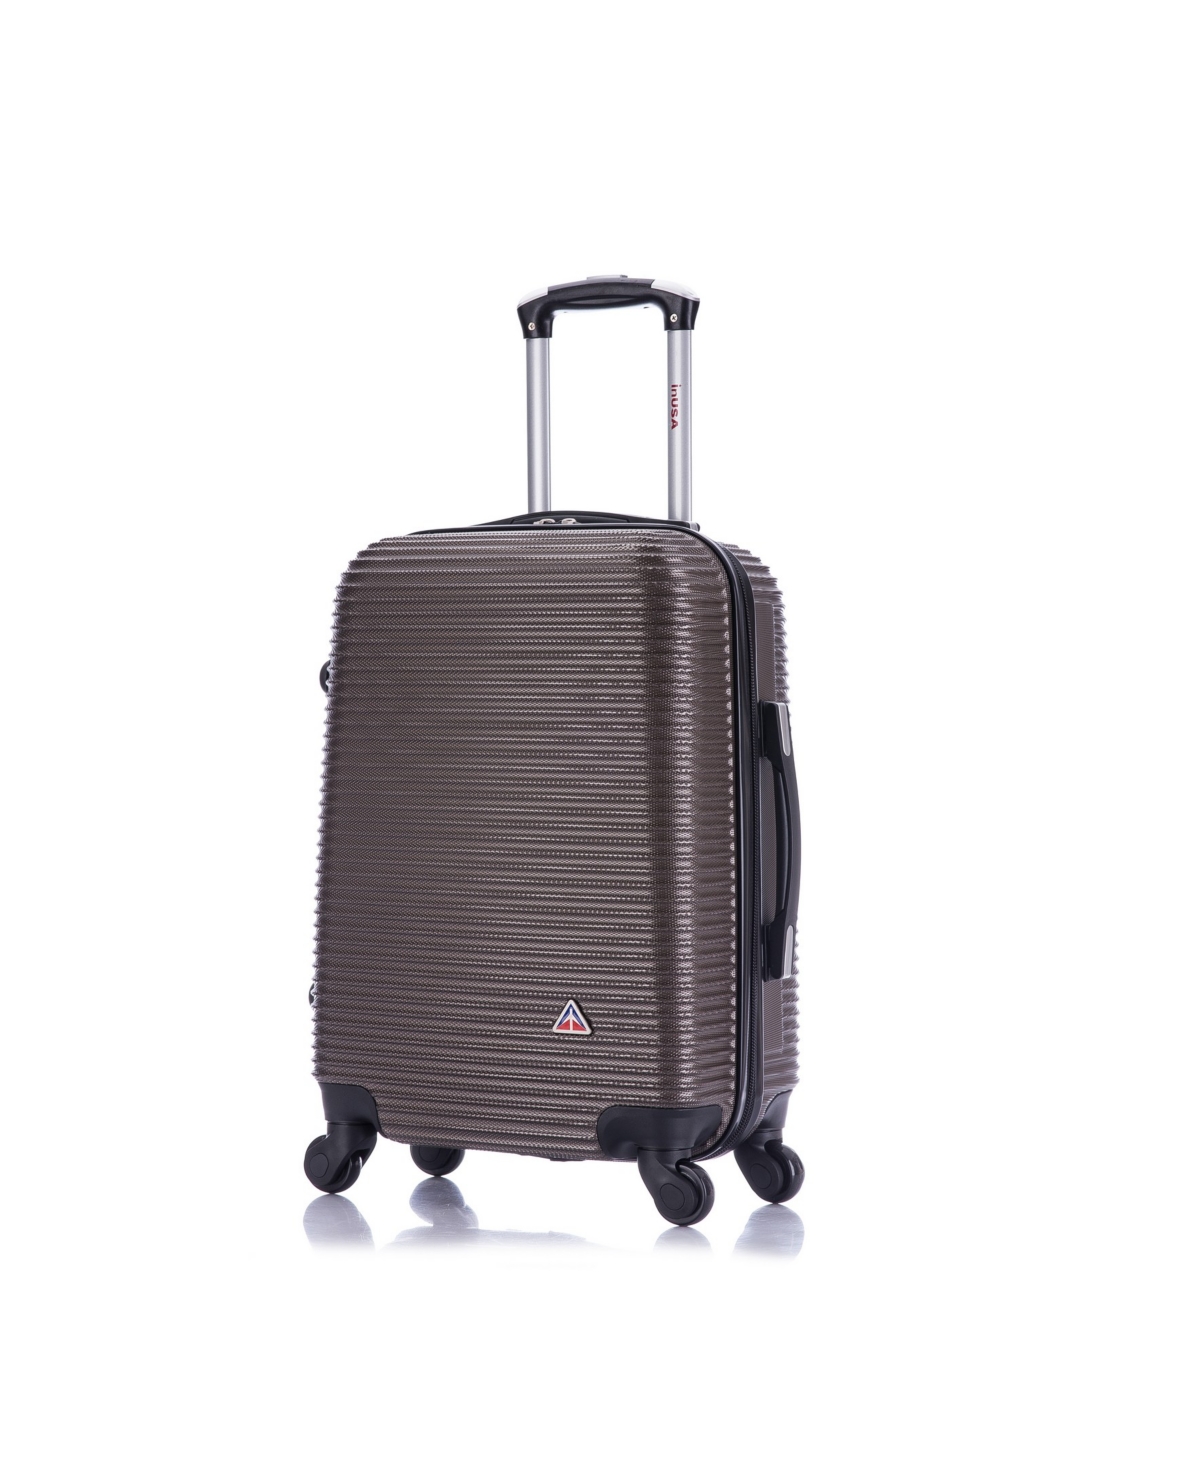 Royal 20" Lightweight Hardside Spinner Carry-on Luggage - Orange